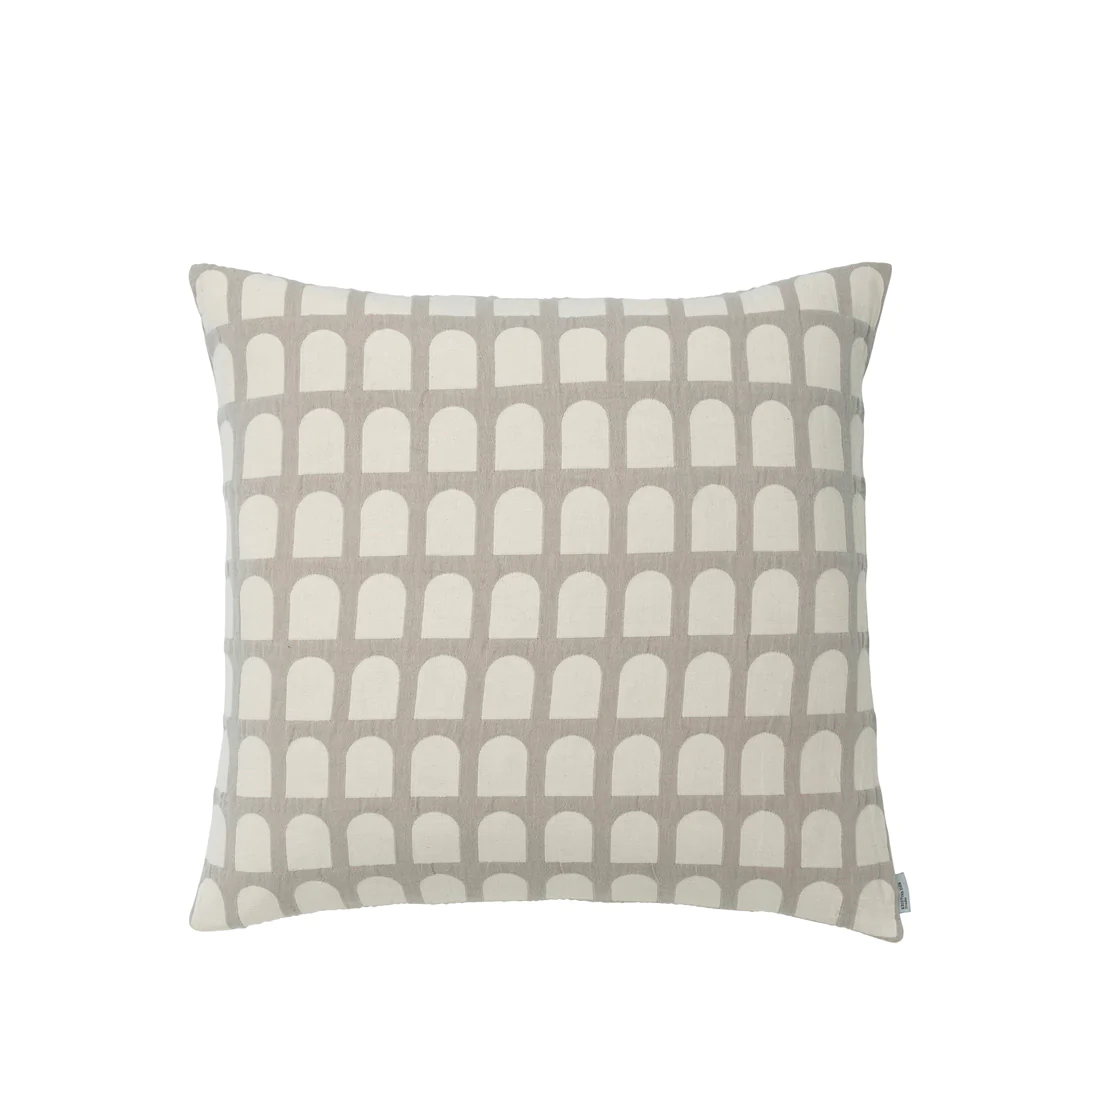 Arch Cushion Cover by Kristina Dam | STIRpad